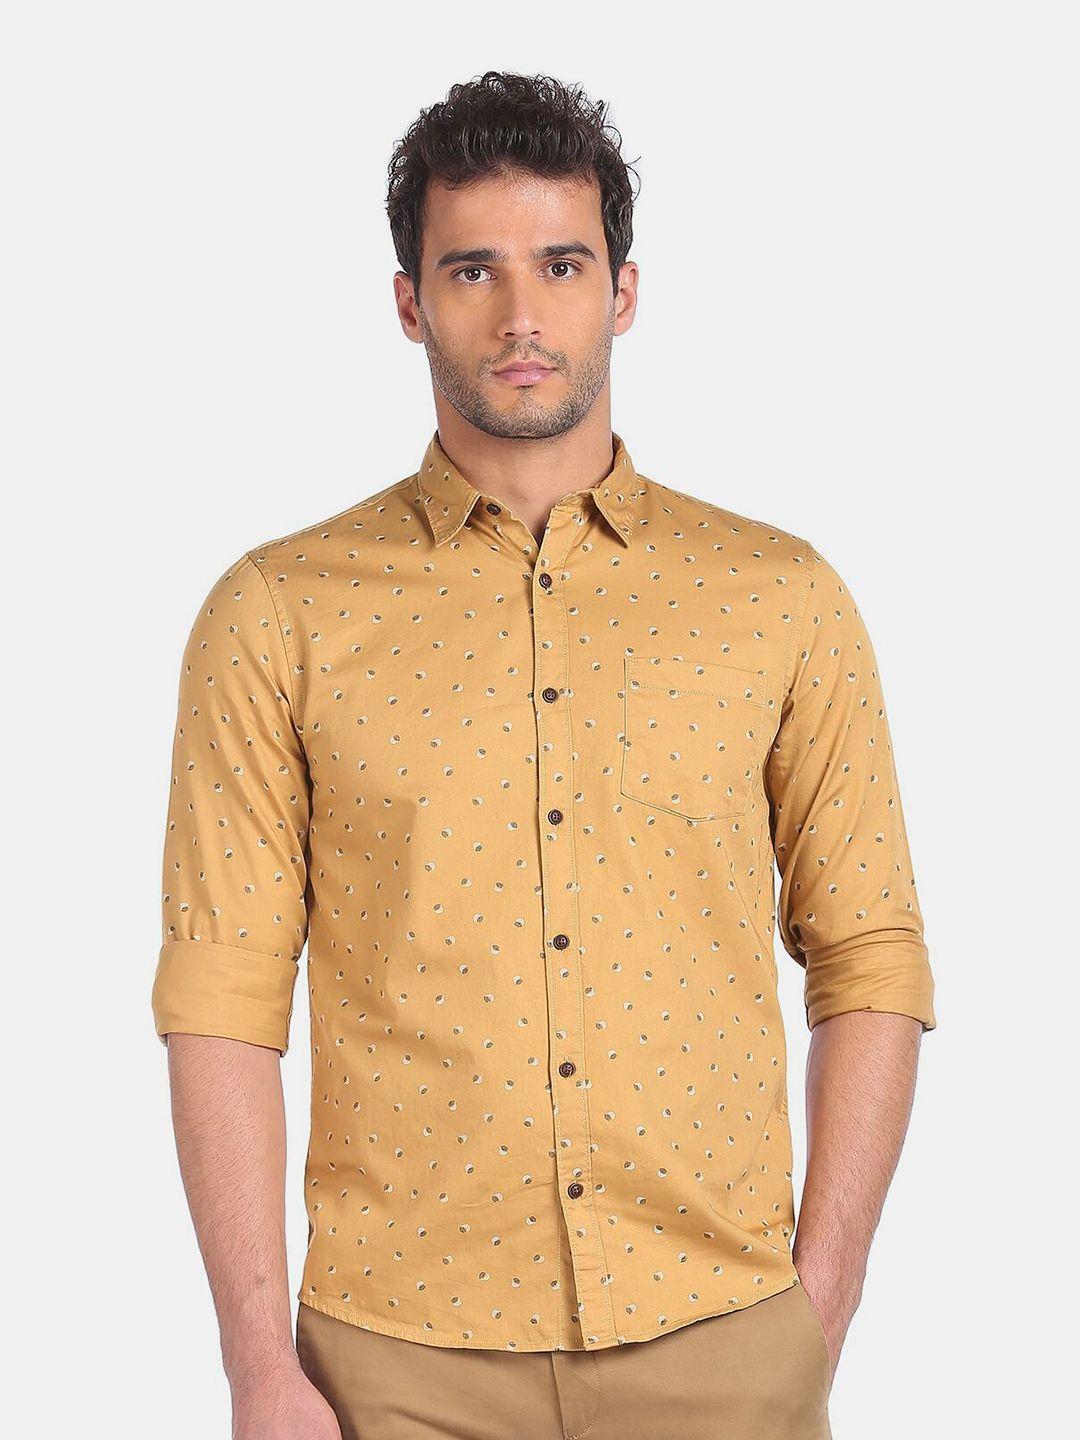 ruggers-men-mustard-yellow-floral-printed-casual-shirt